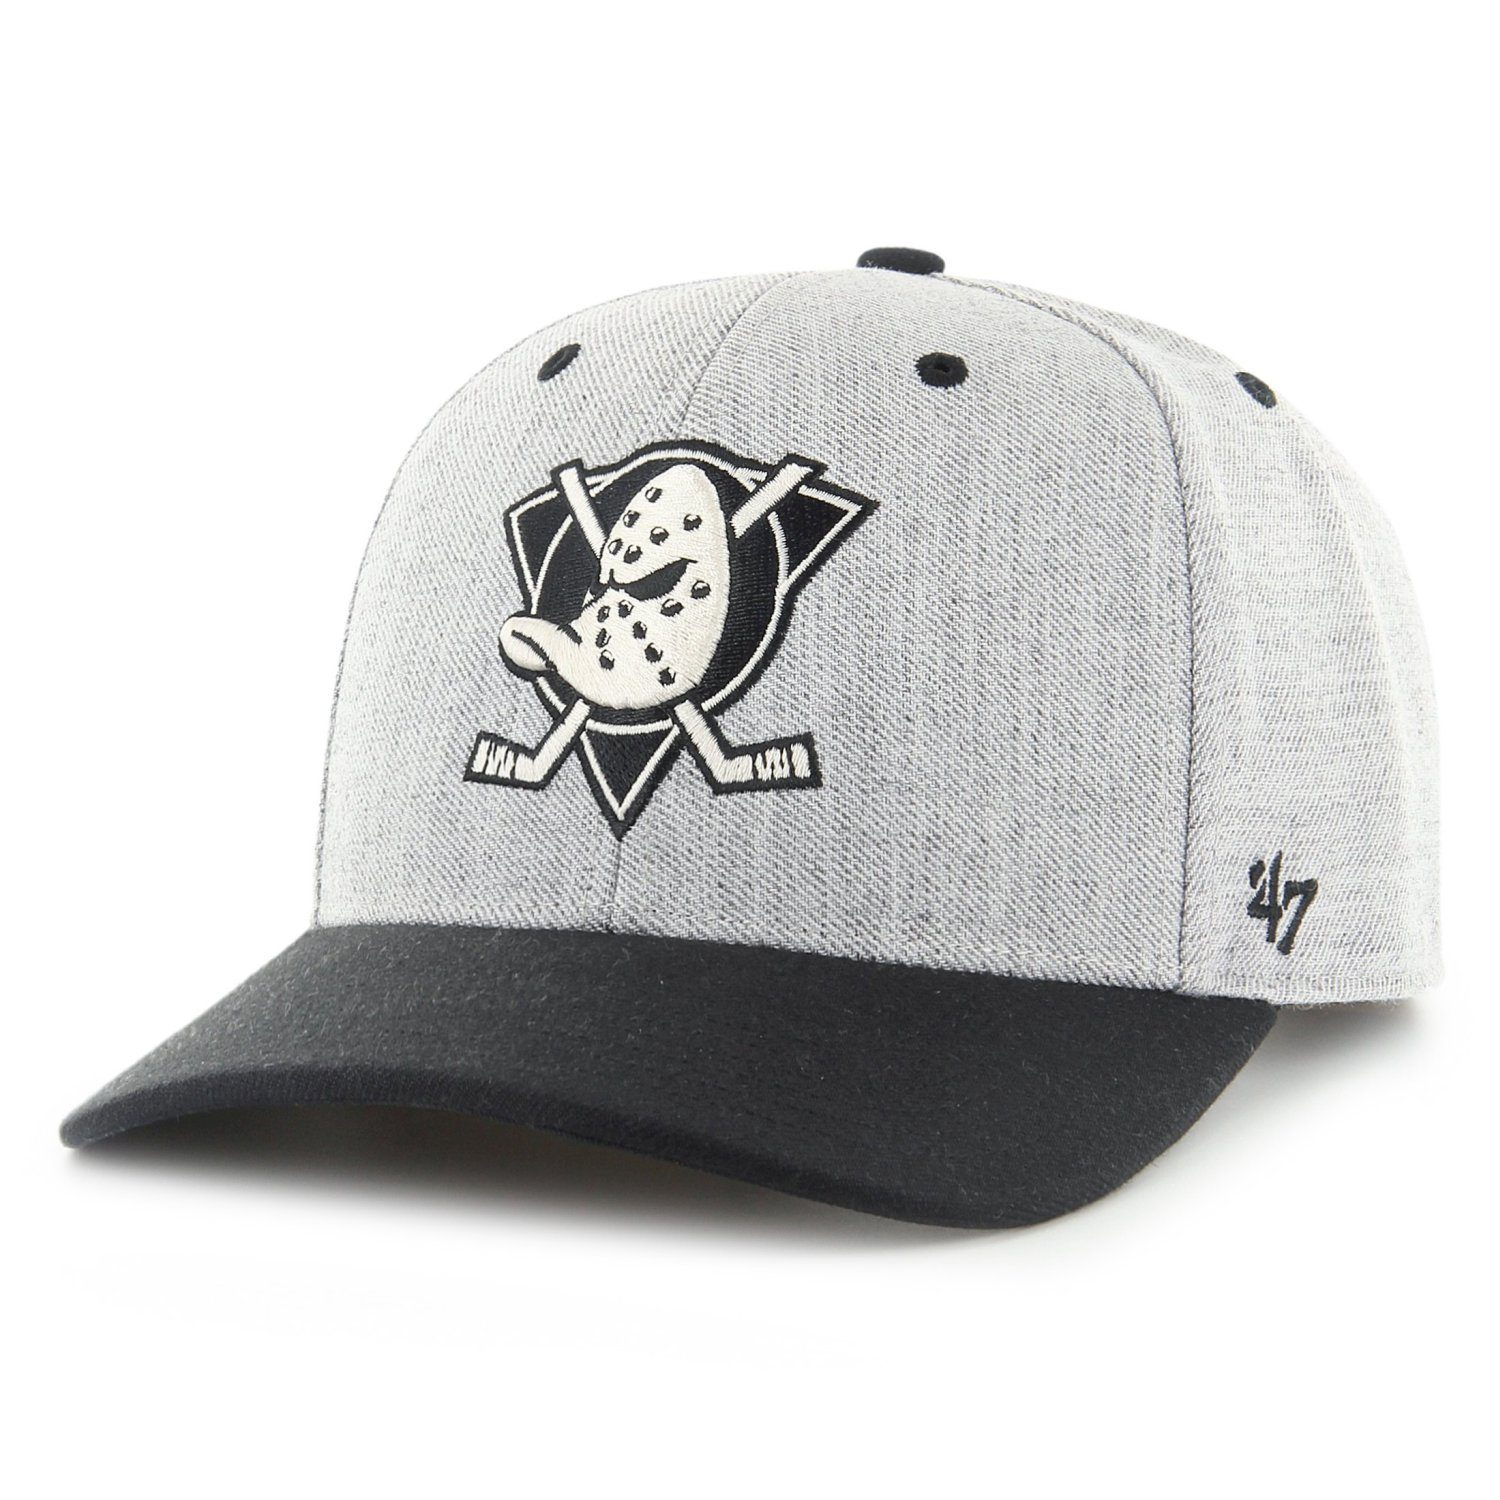 '47 Brand Snapback Cap STORM CLOUD Anaheim Ducks